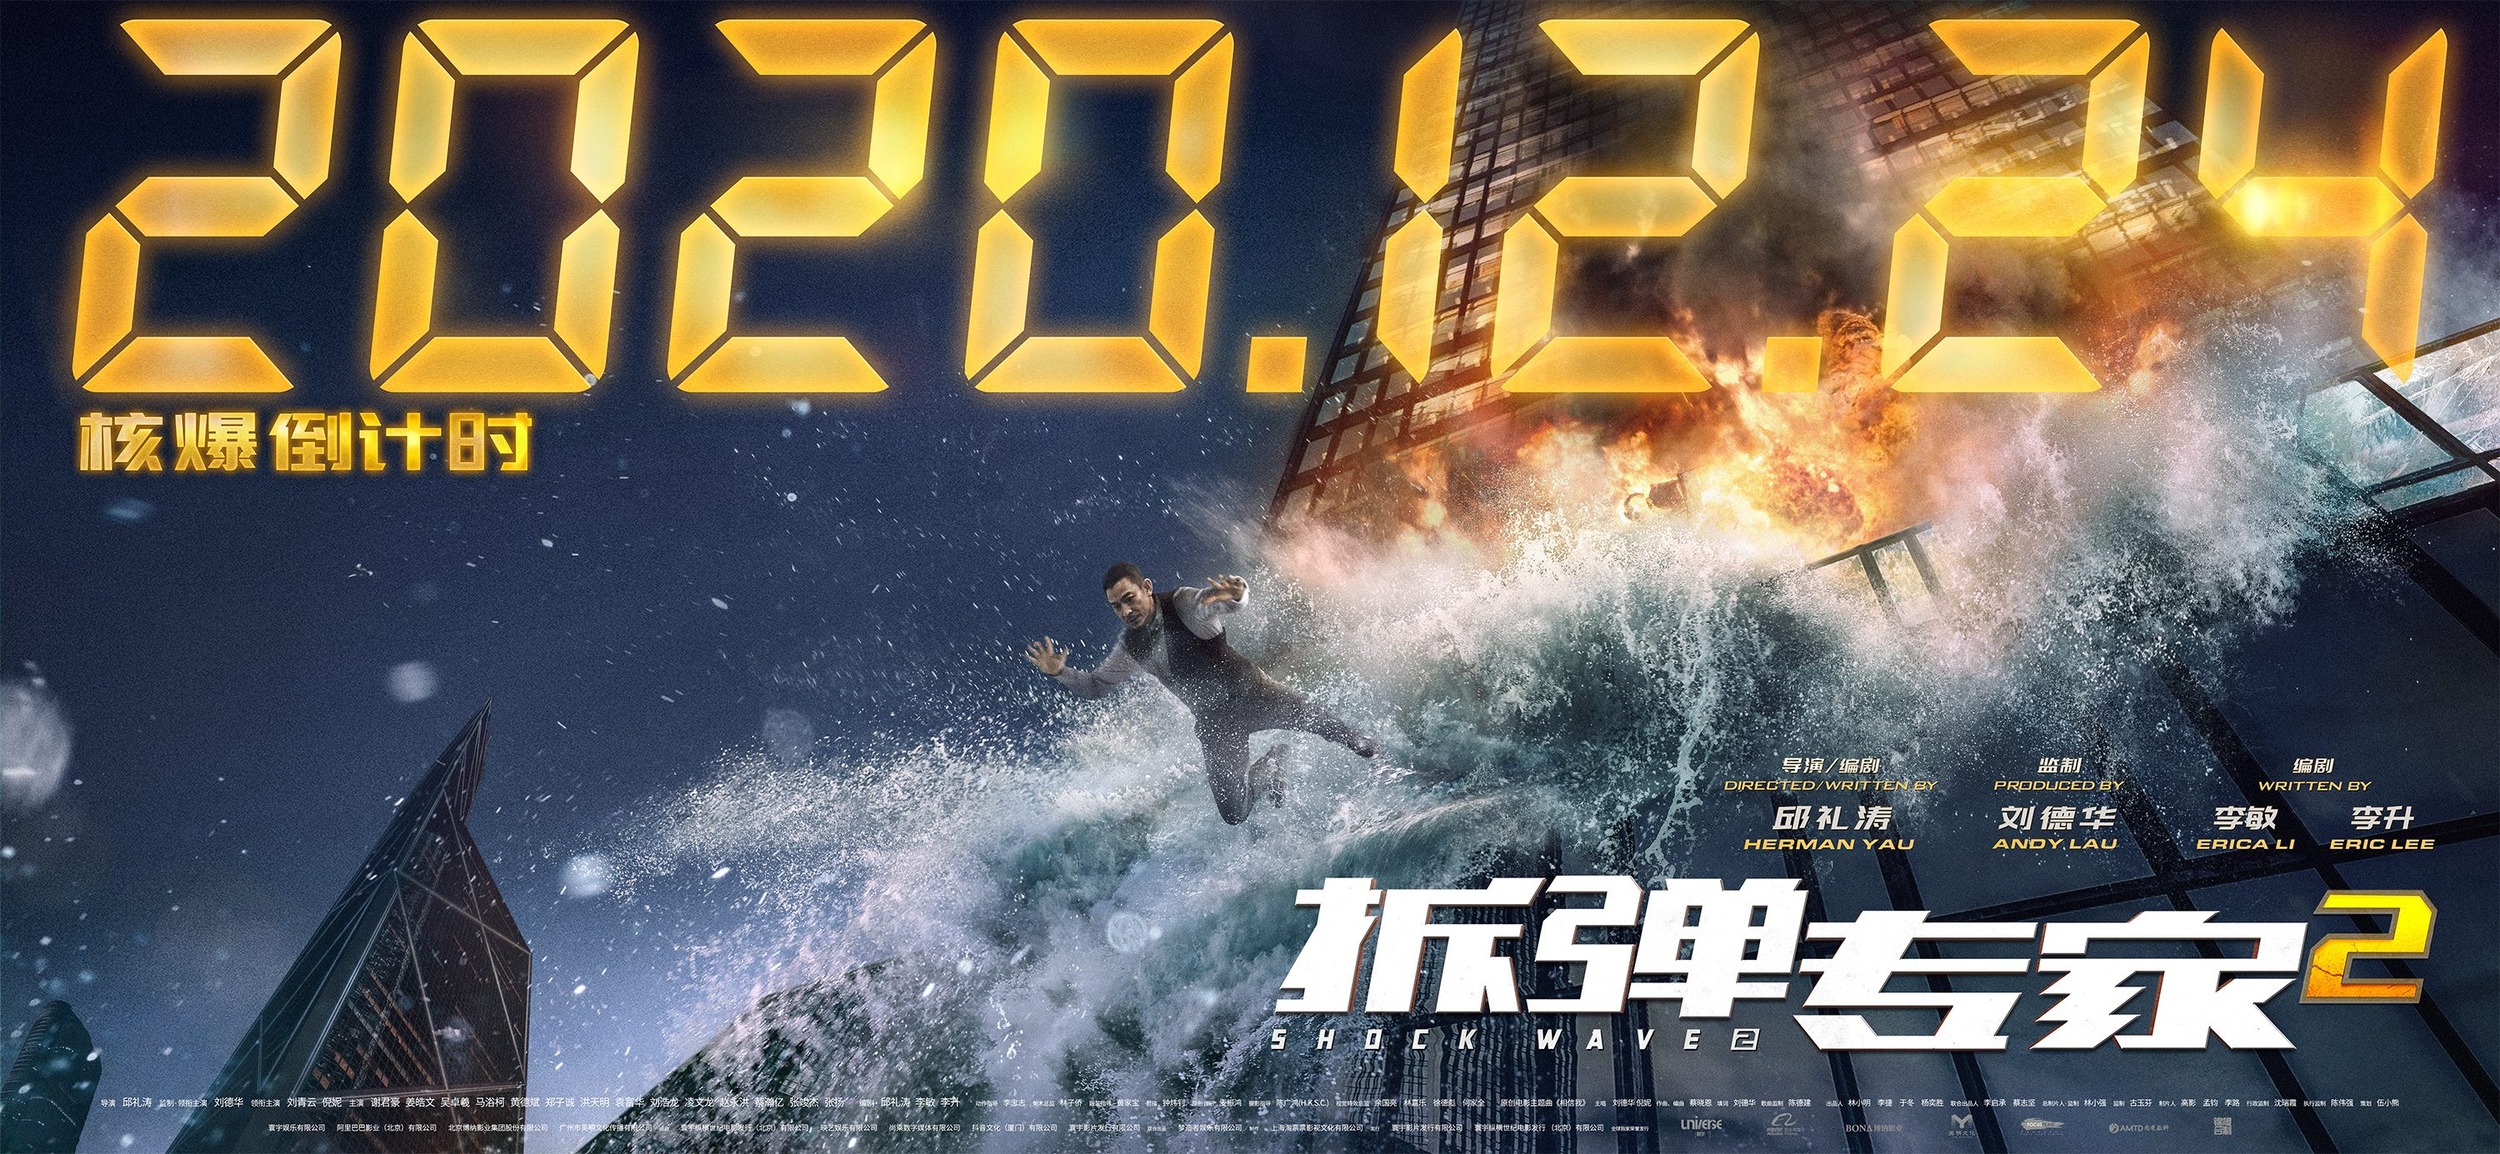 Mega Sized Movie Poster Image for Shock Wave 2 (#6 of 7)